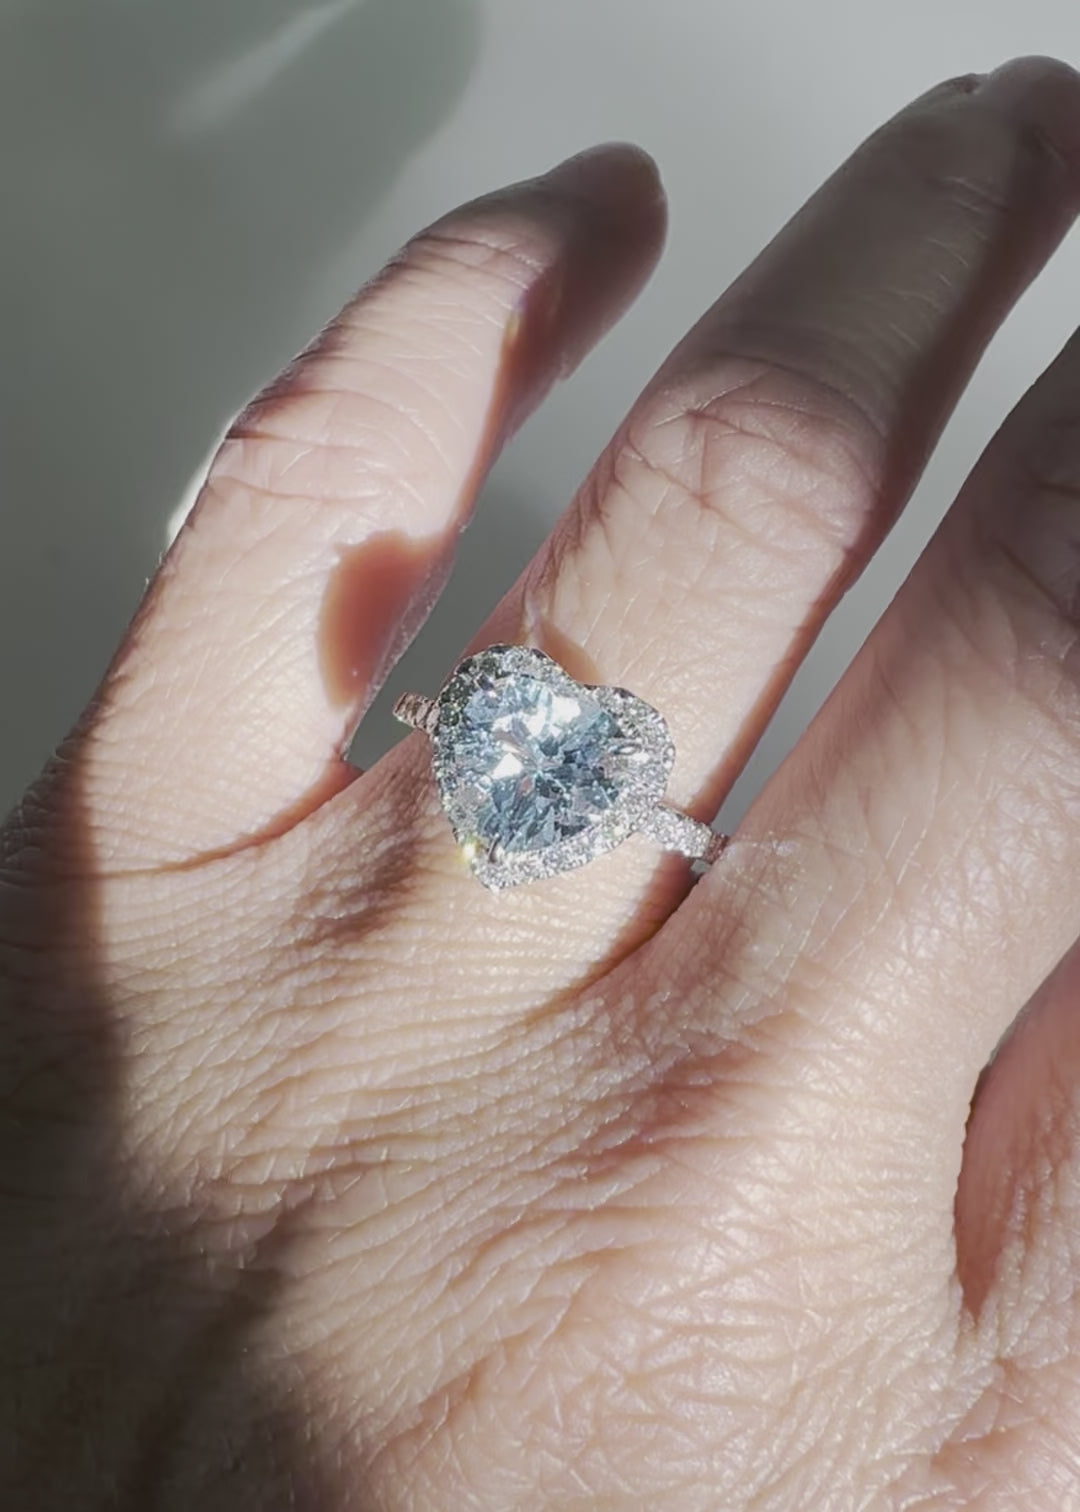 Heart Shaped Infinity Diamond Ring | Jewelry by Johan - Jewelry by Johan